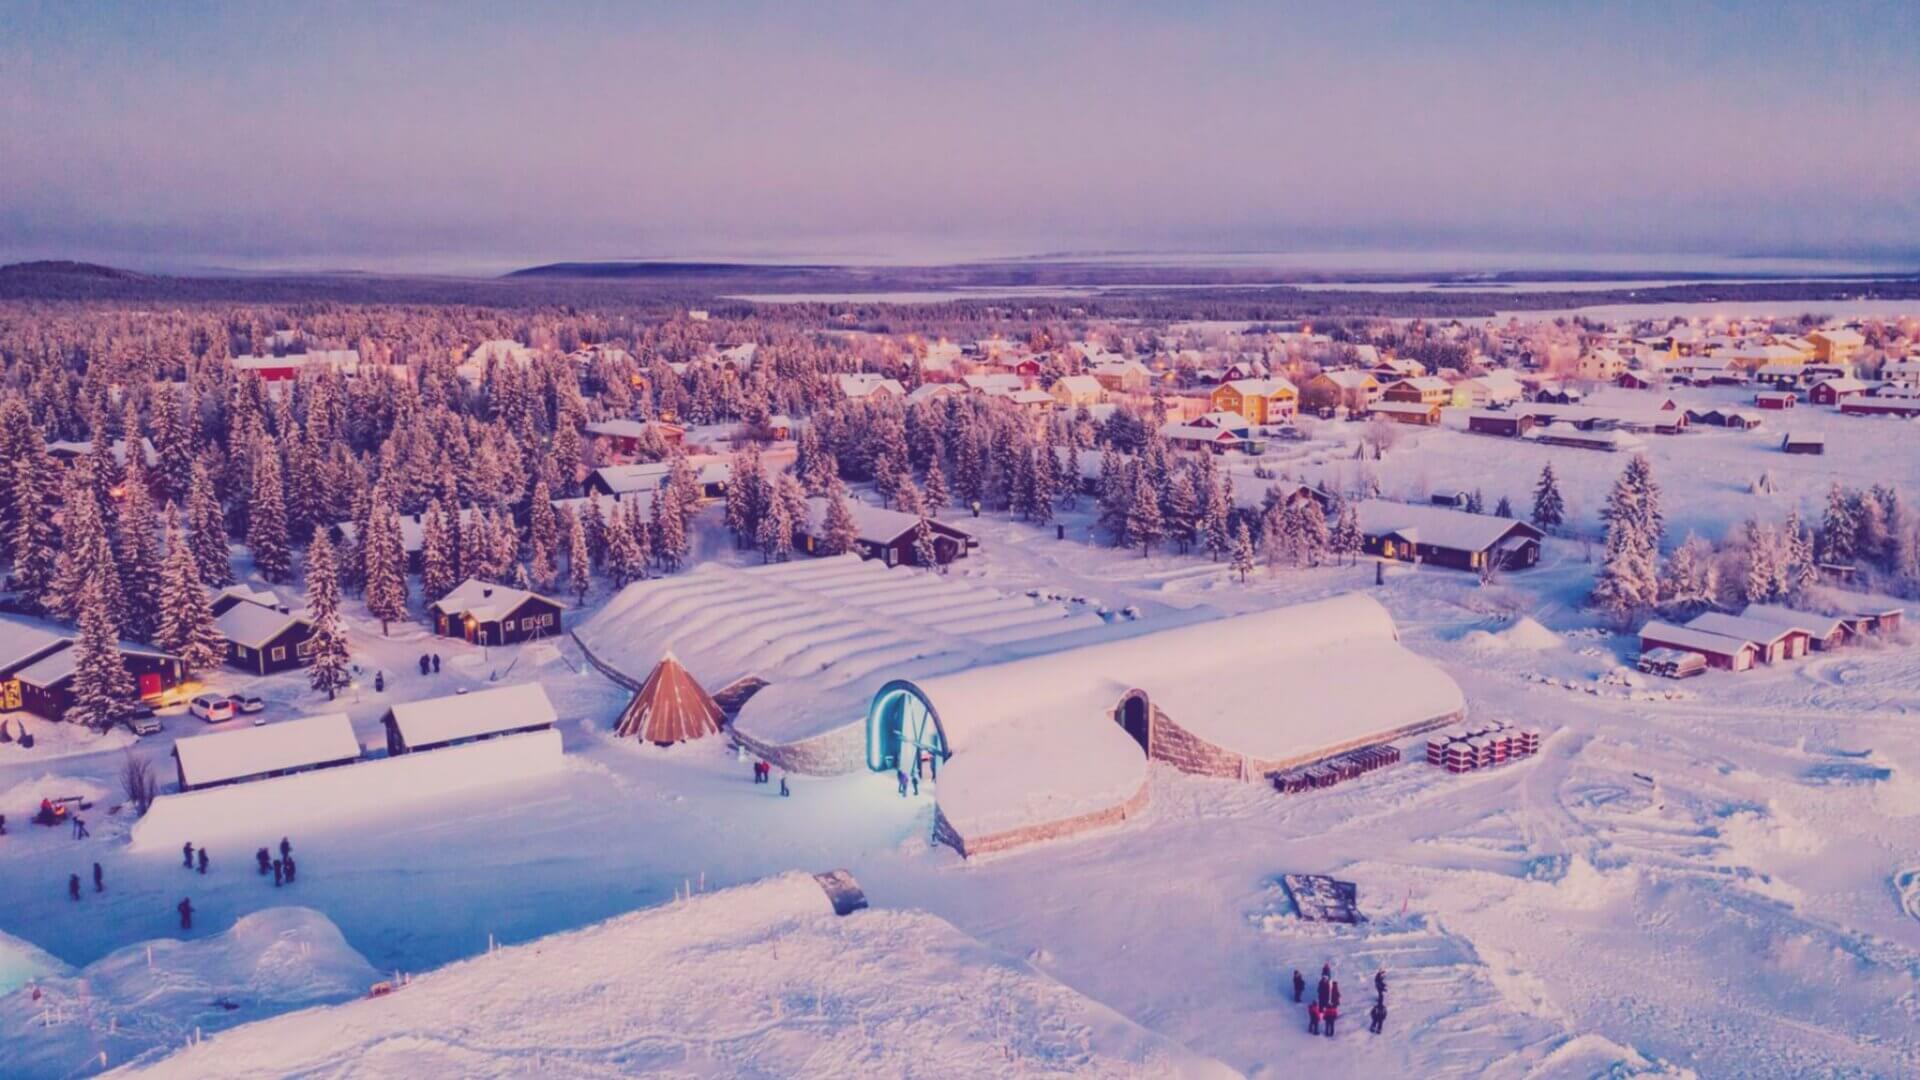 Sweden's IceHotel